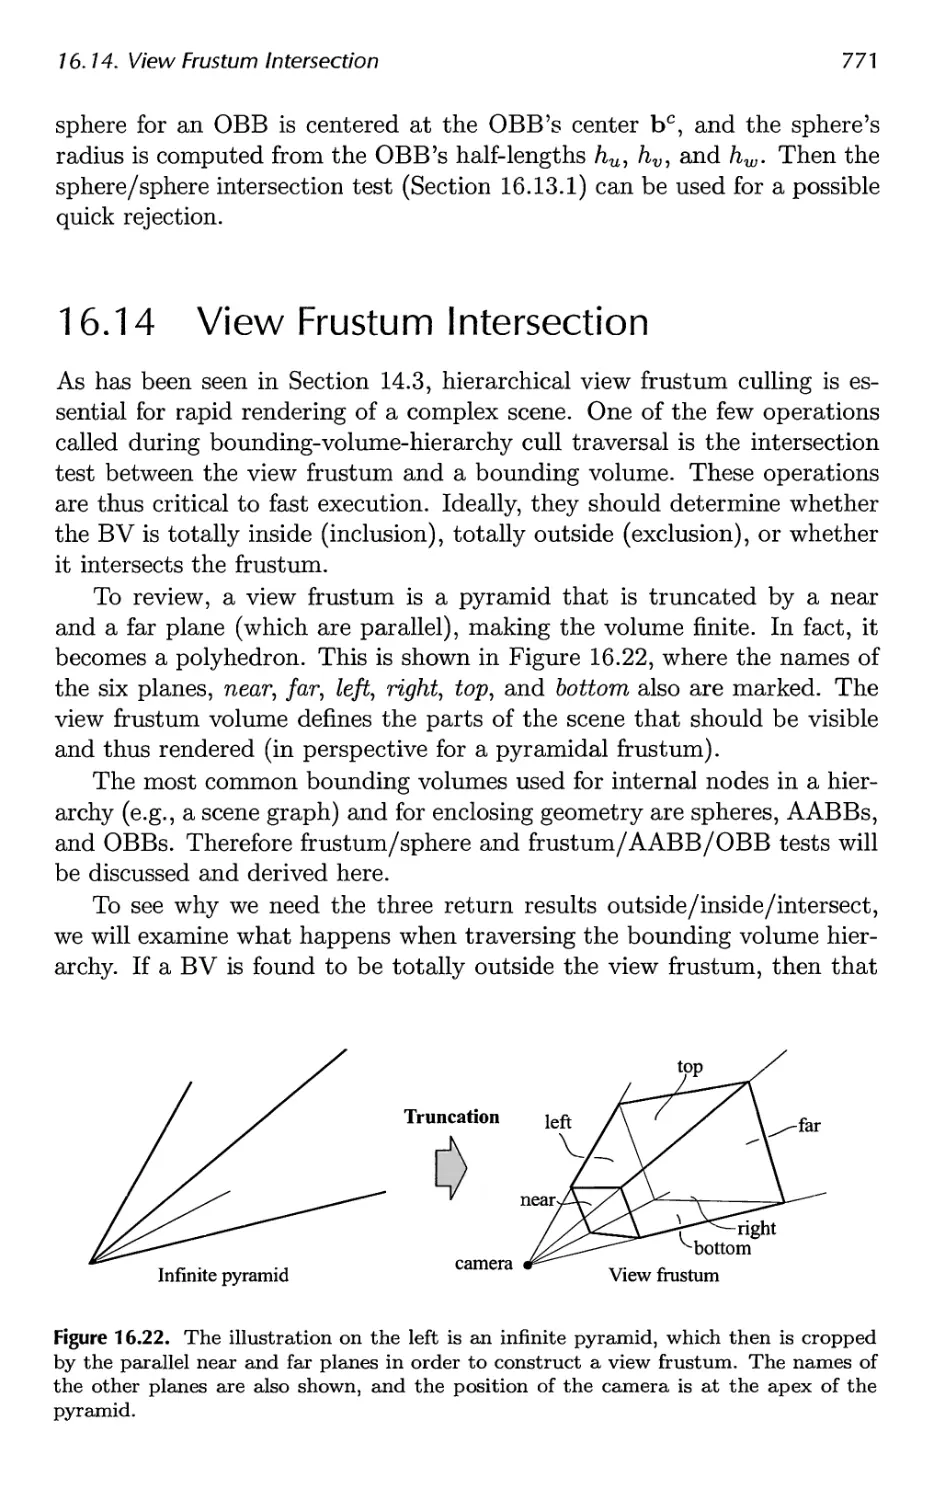 16.14 View Frustum Intersection